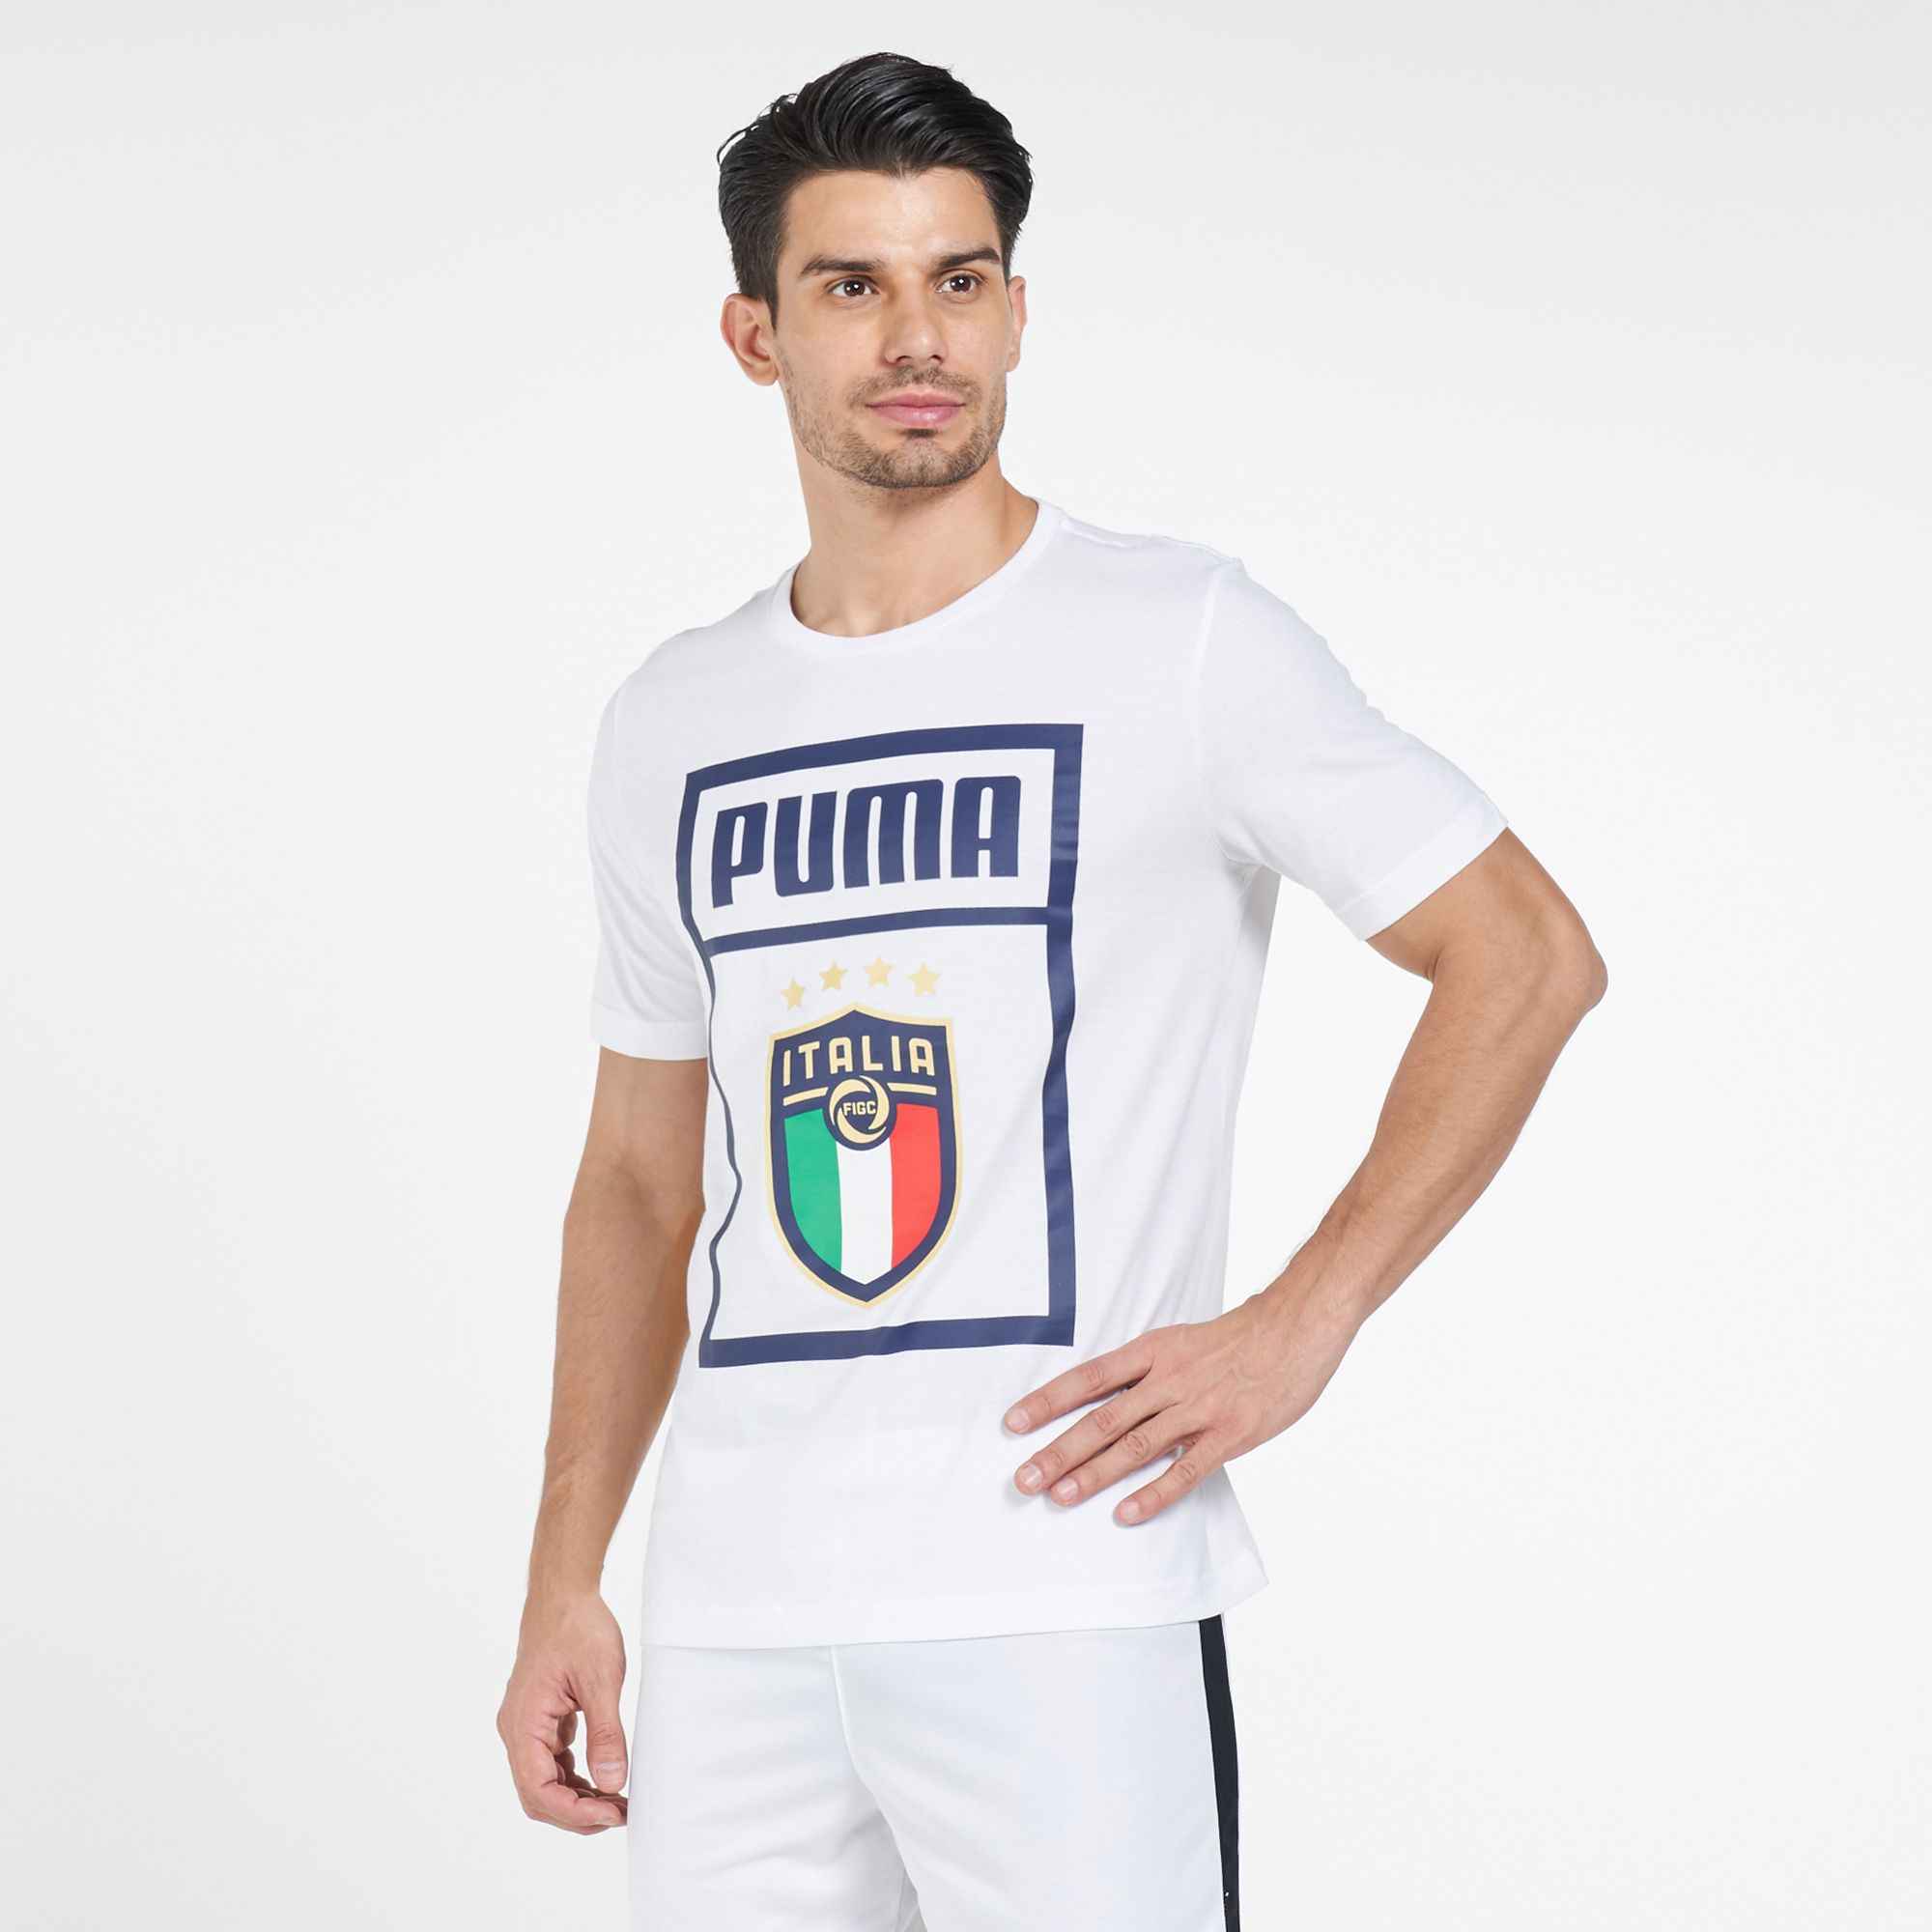 italia t shirt puma